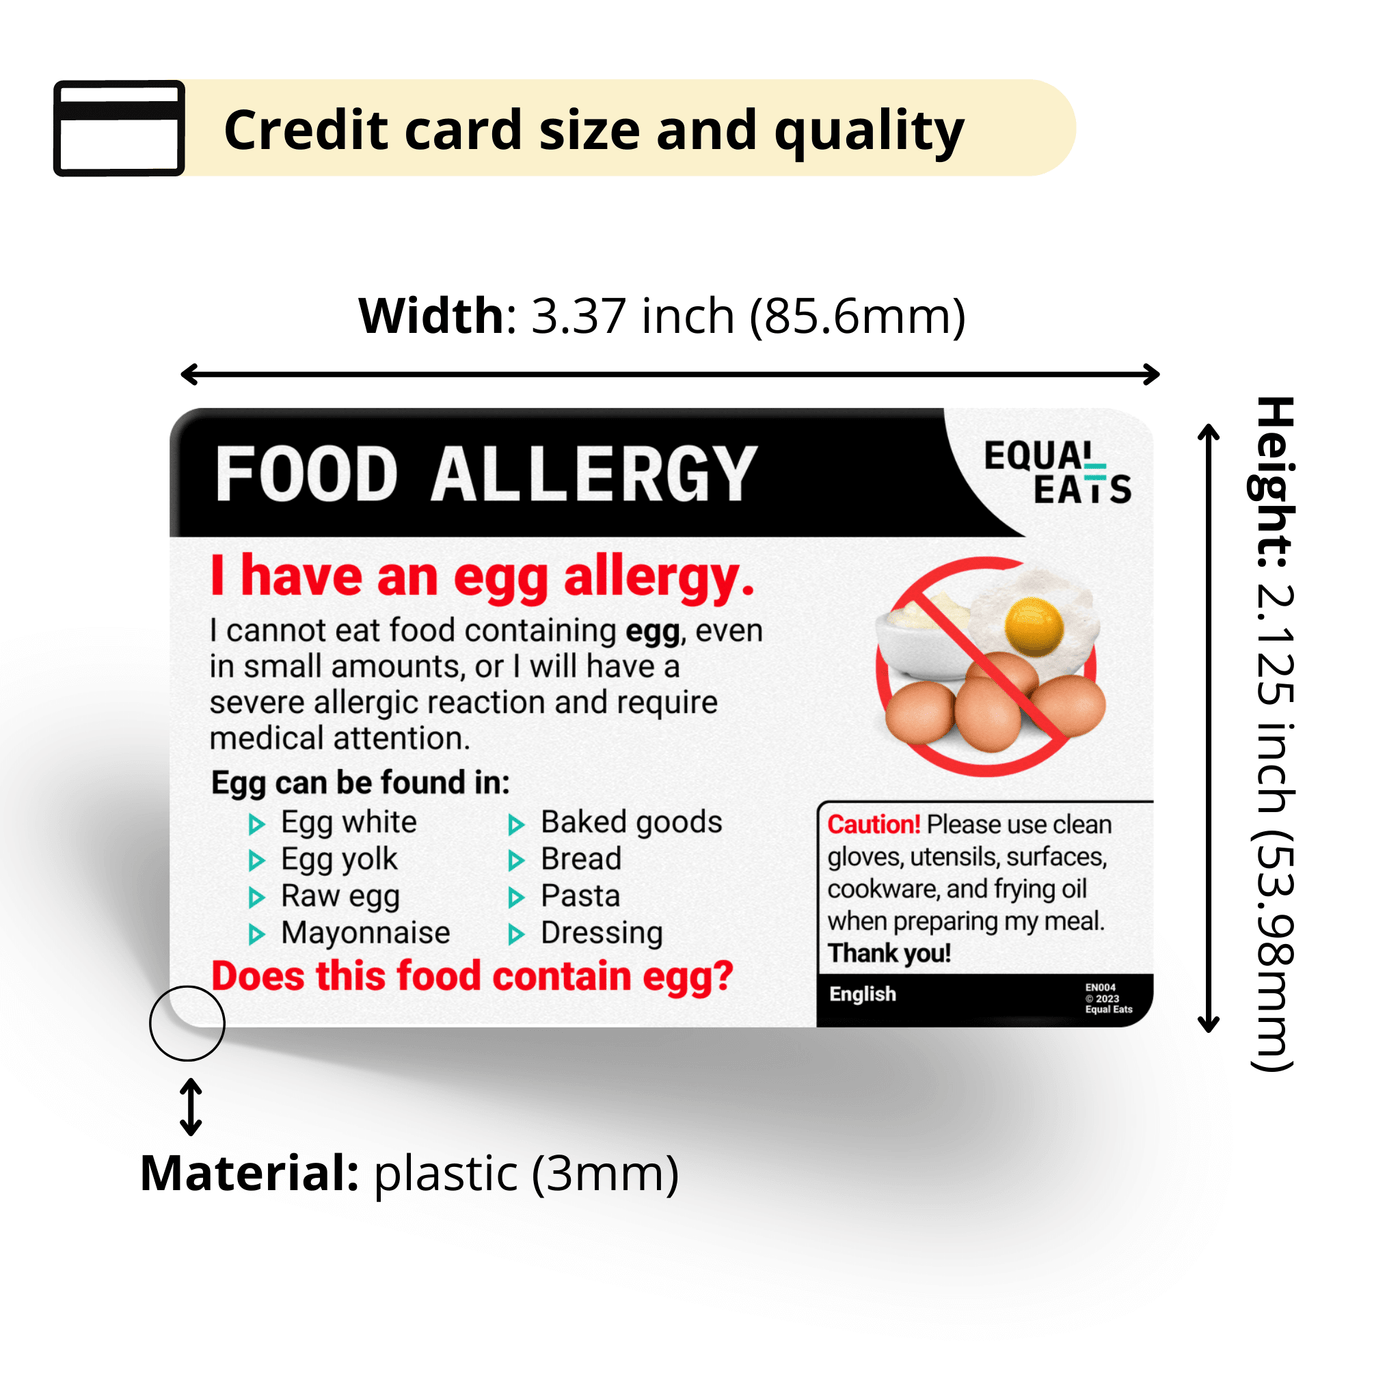 Equal Eats Allergy Cards for Egg